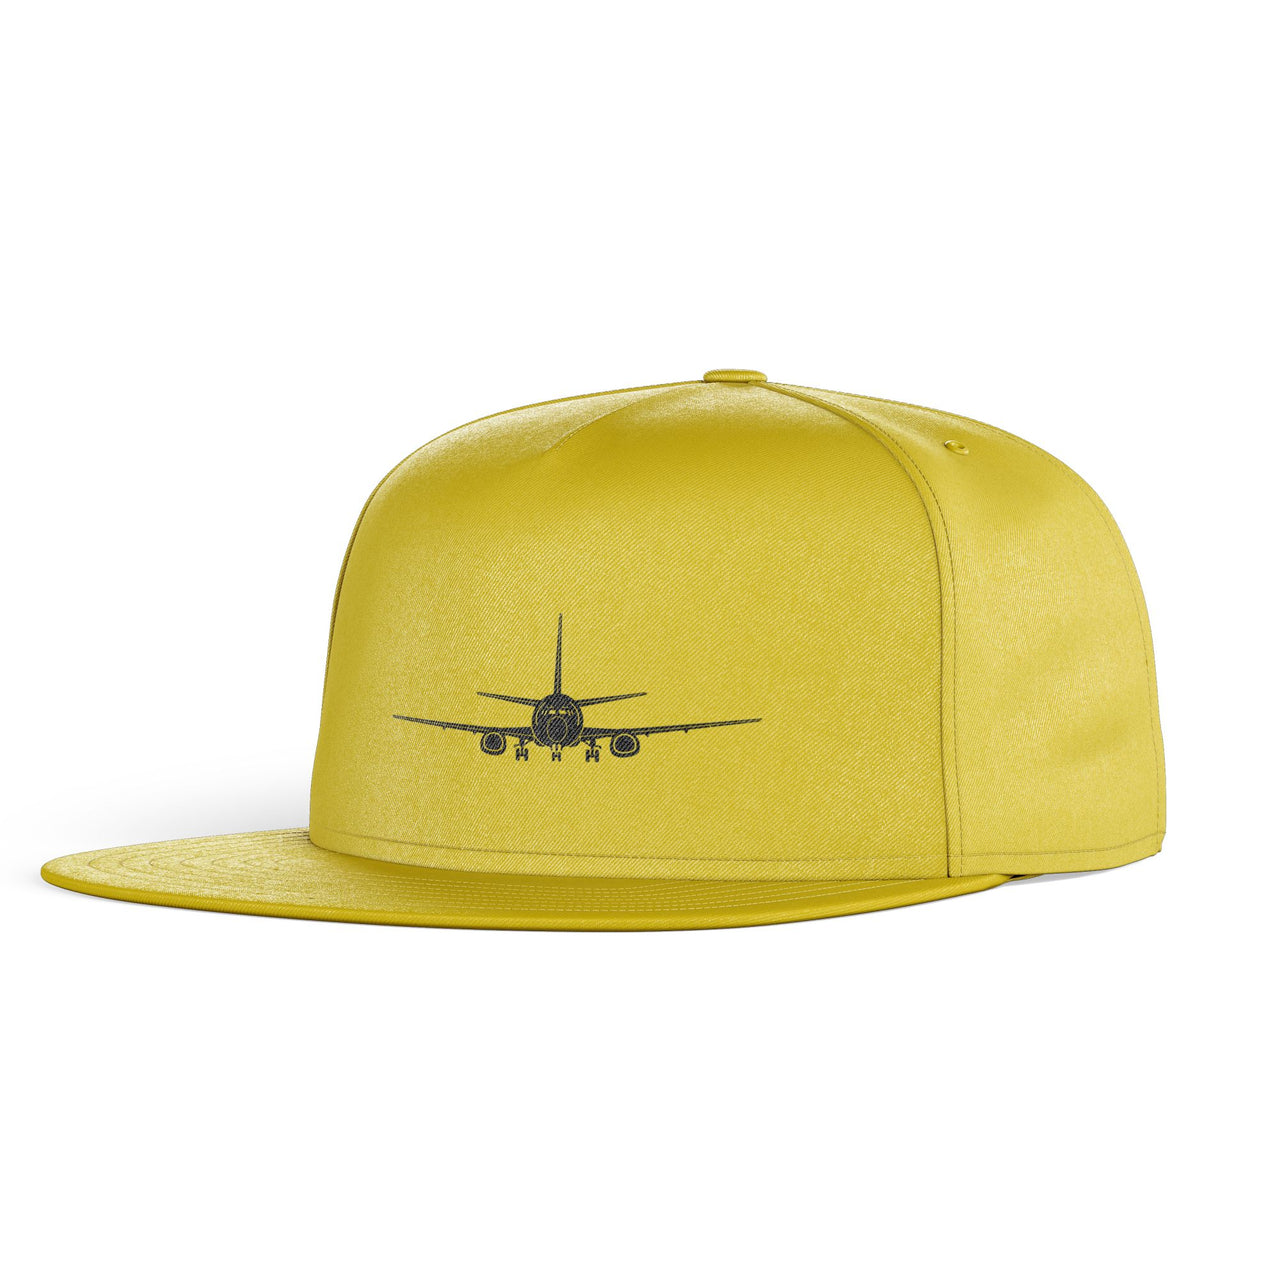 Boeing 737 Silhouette Designed Snapback Caps & Hats